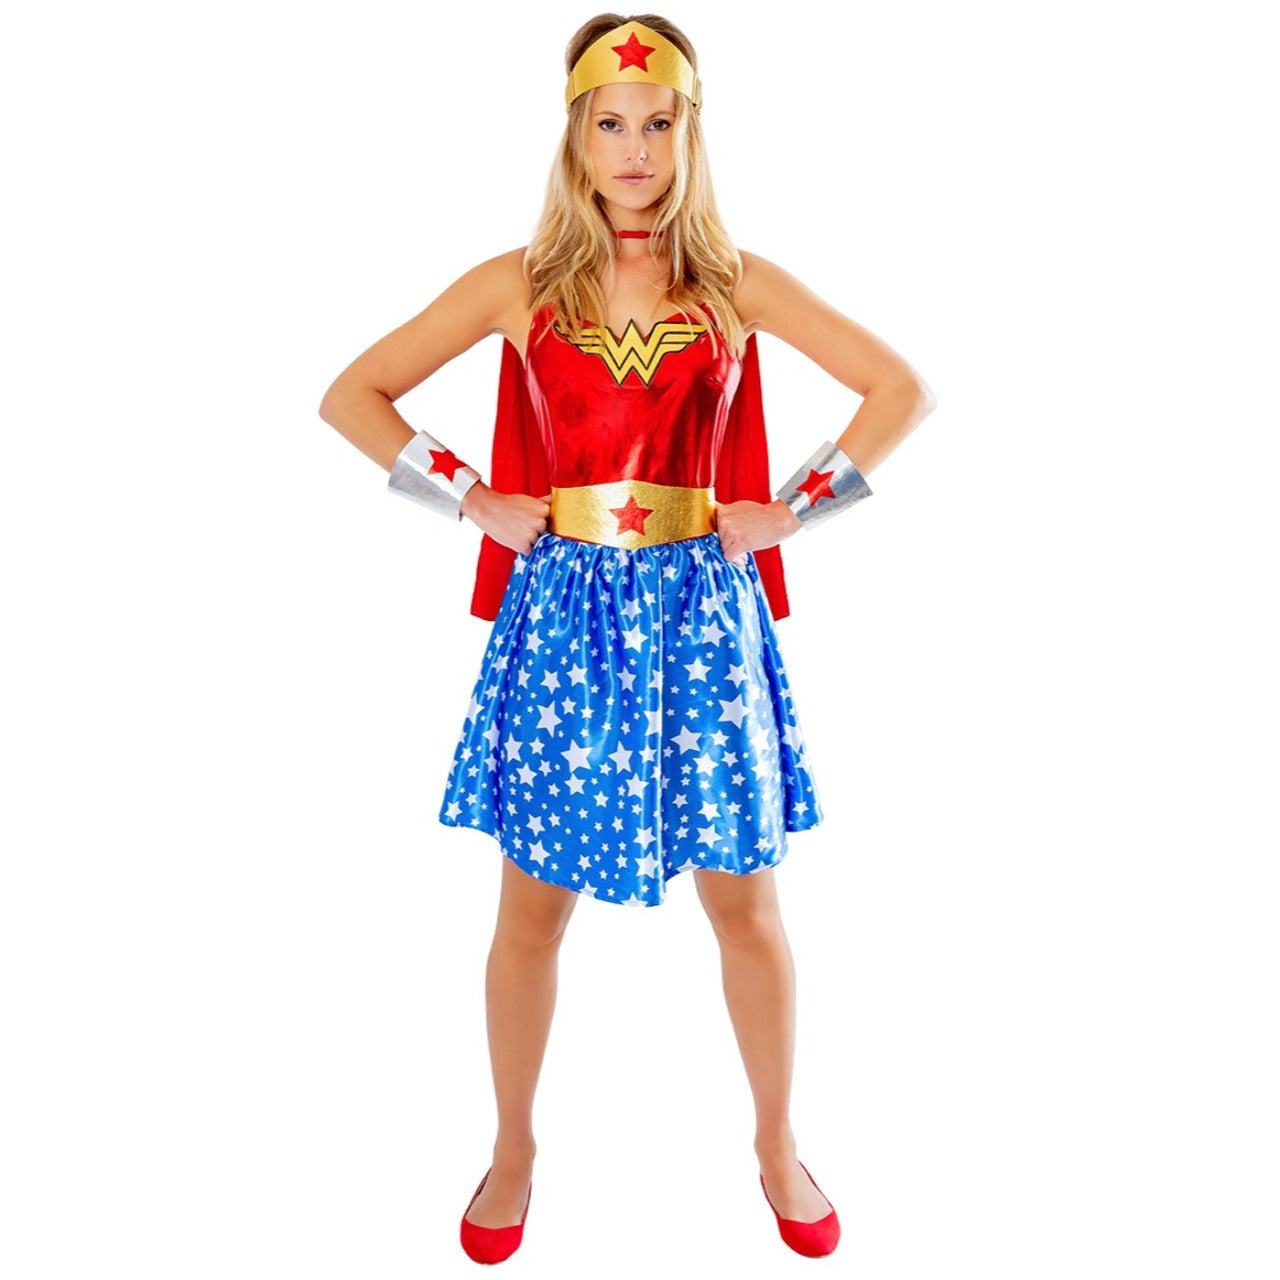 Acquista online costume da Wonder Woman™ deluxe adulto